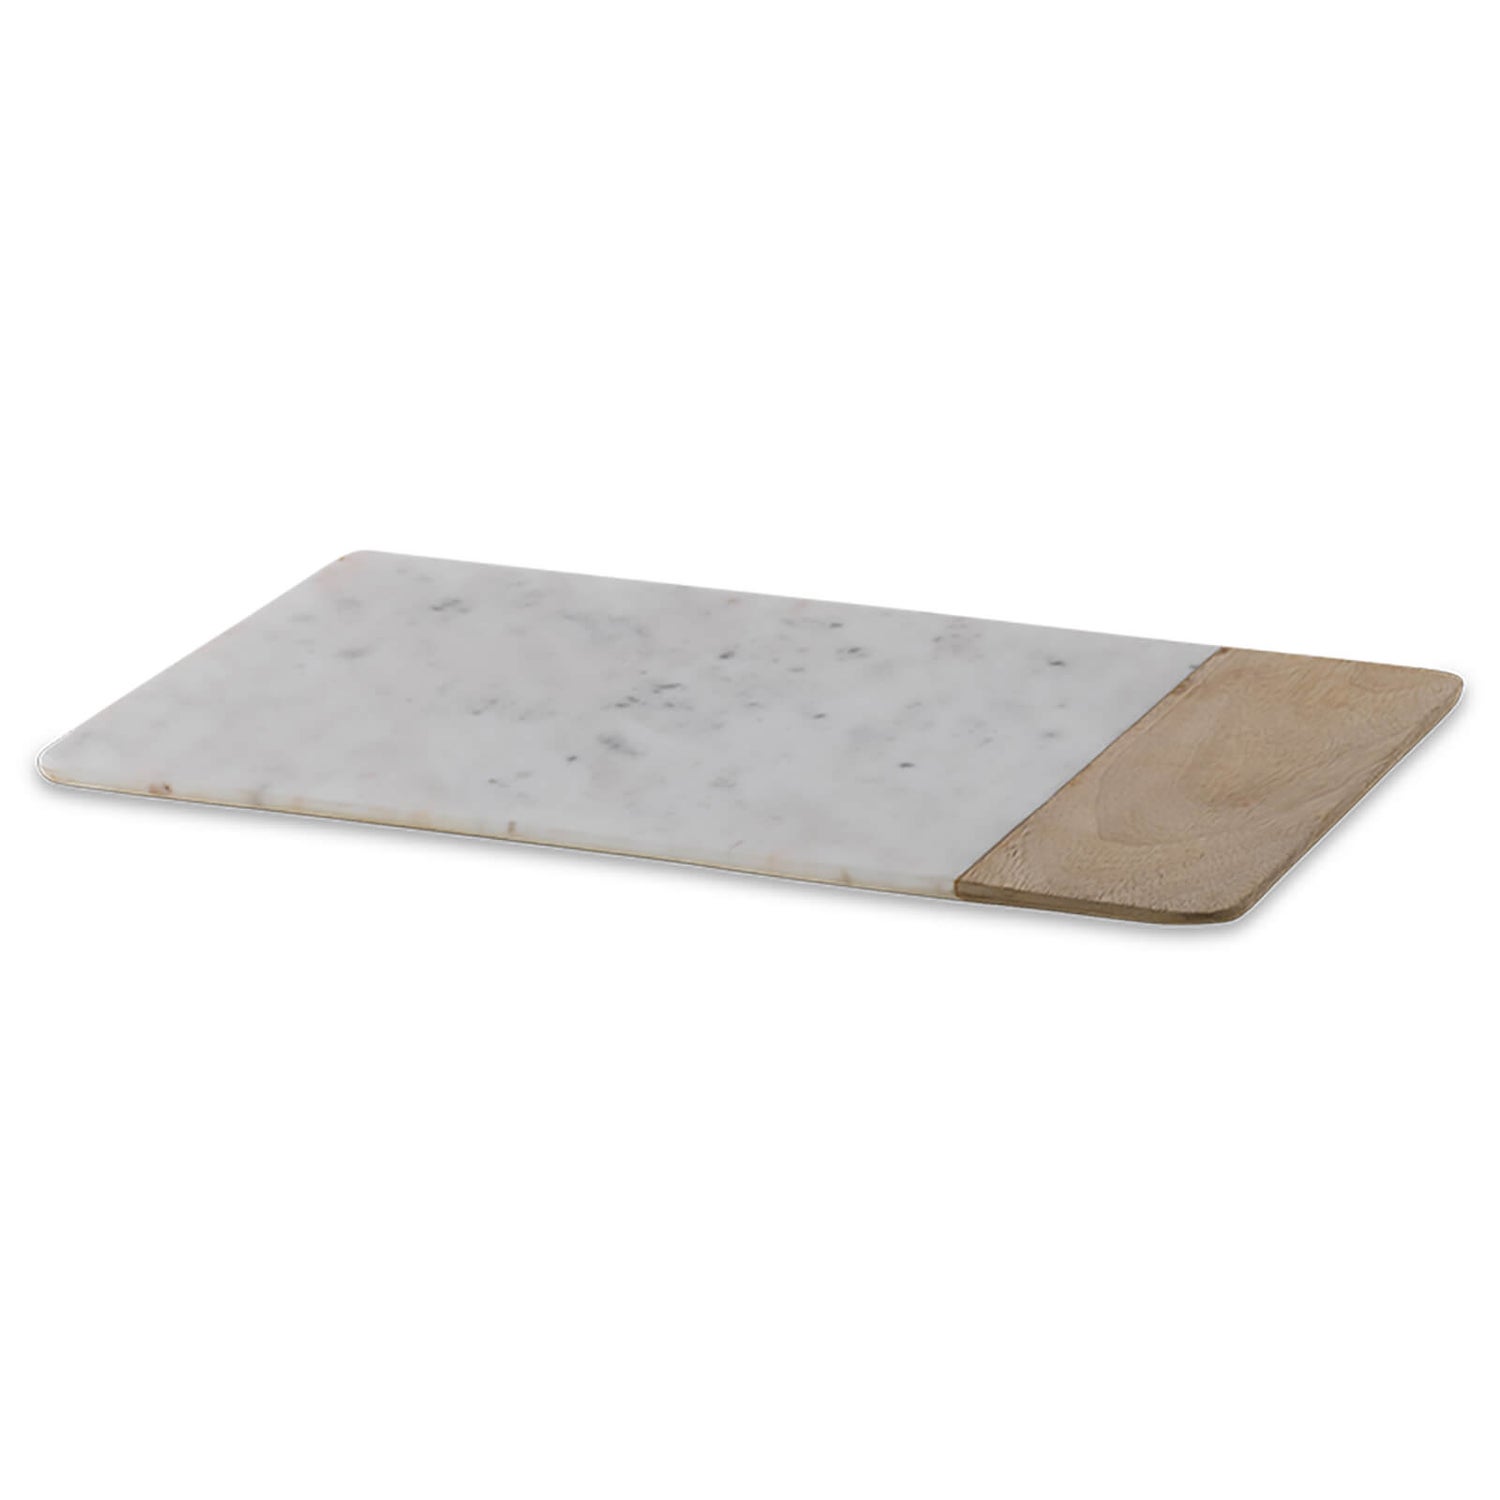 Nkuku Bwari Long Marble and Mango Wood Chopping Board - Large - White